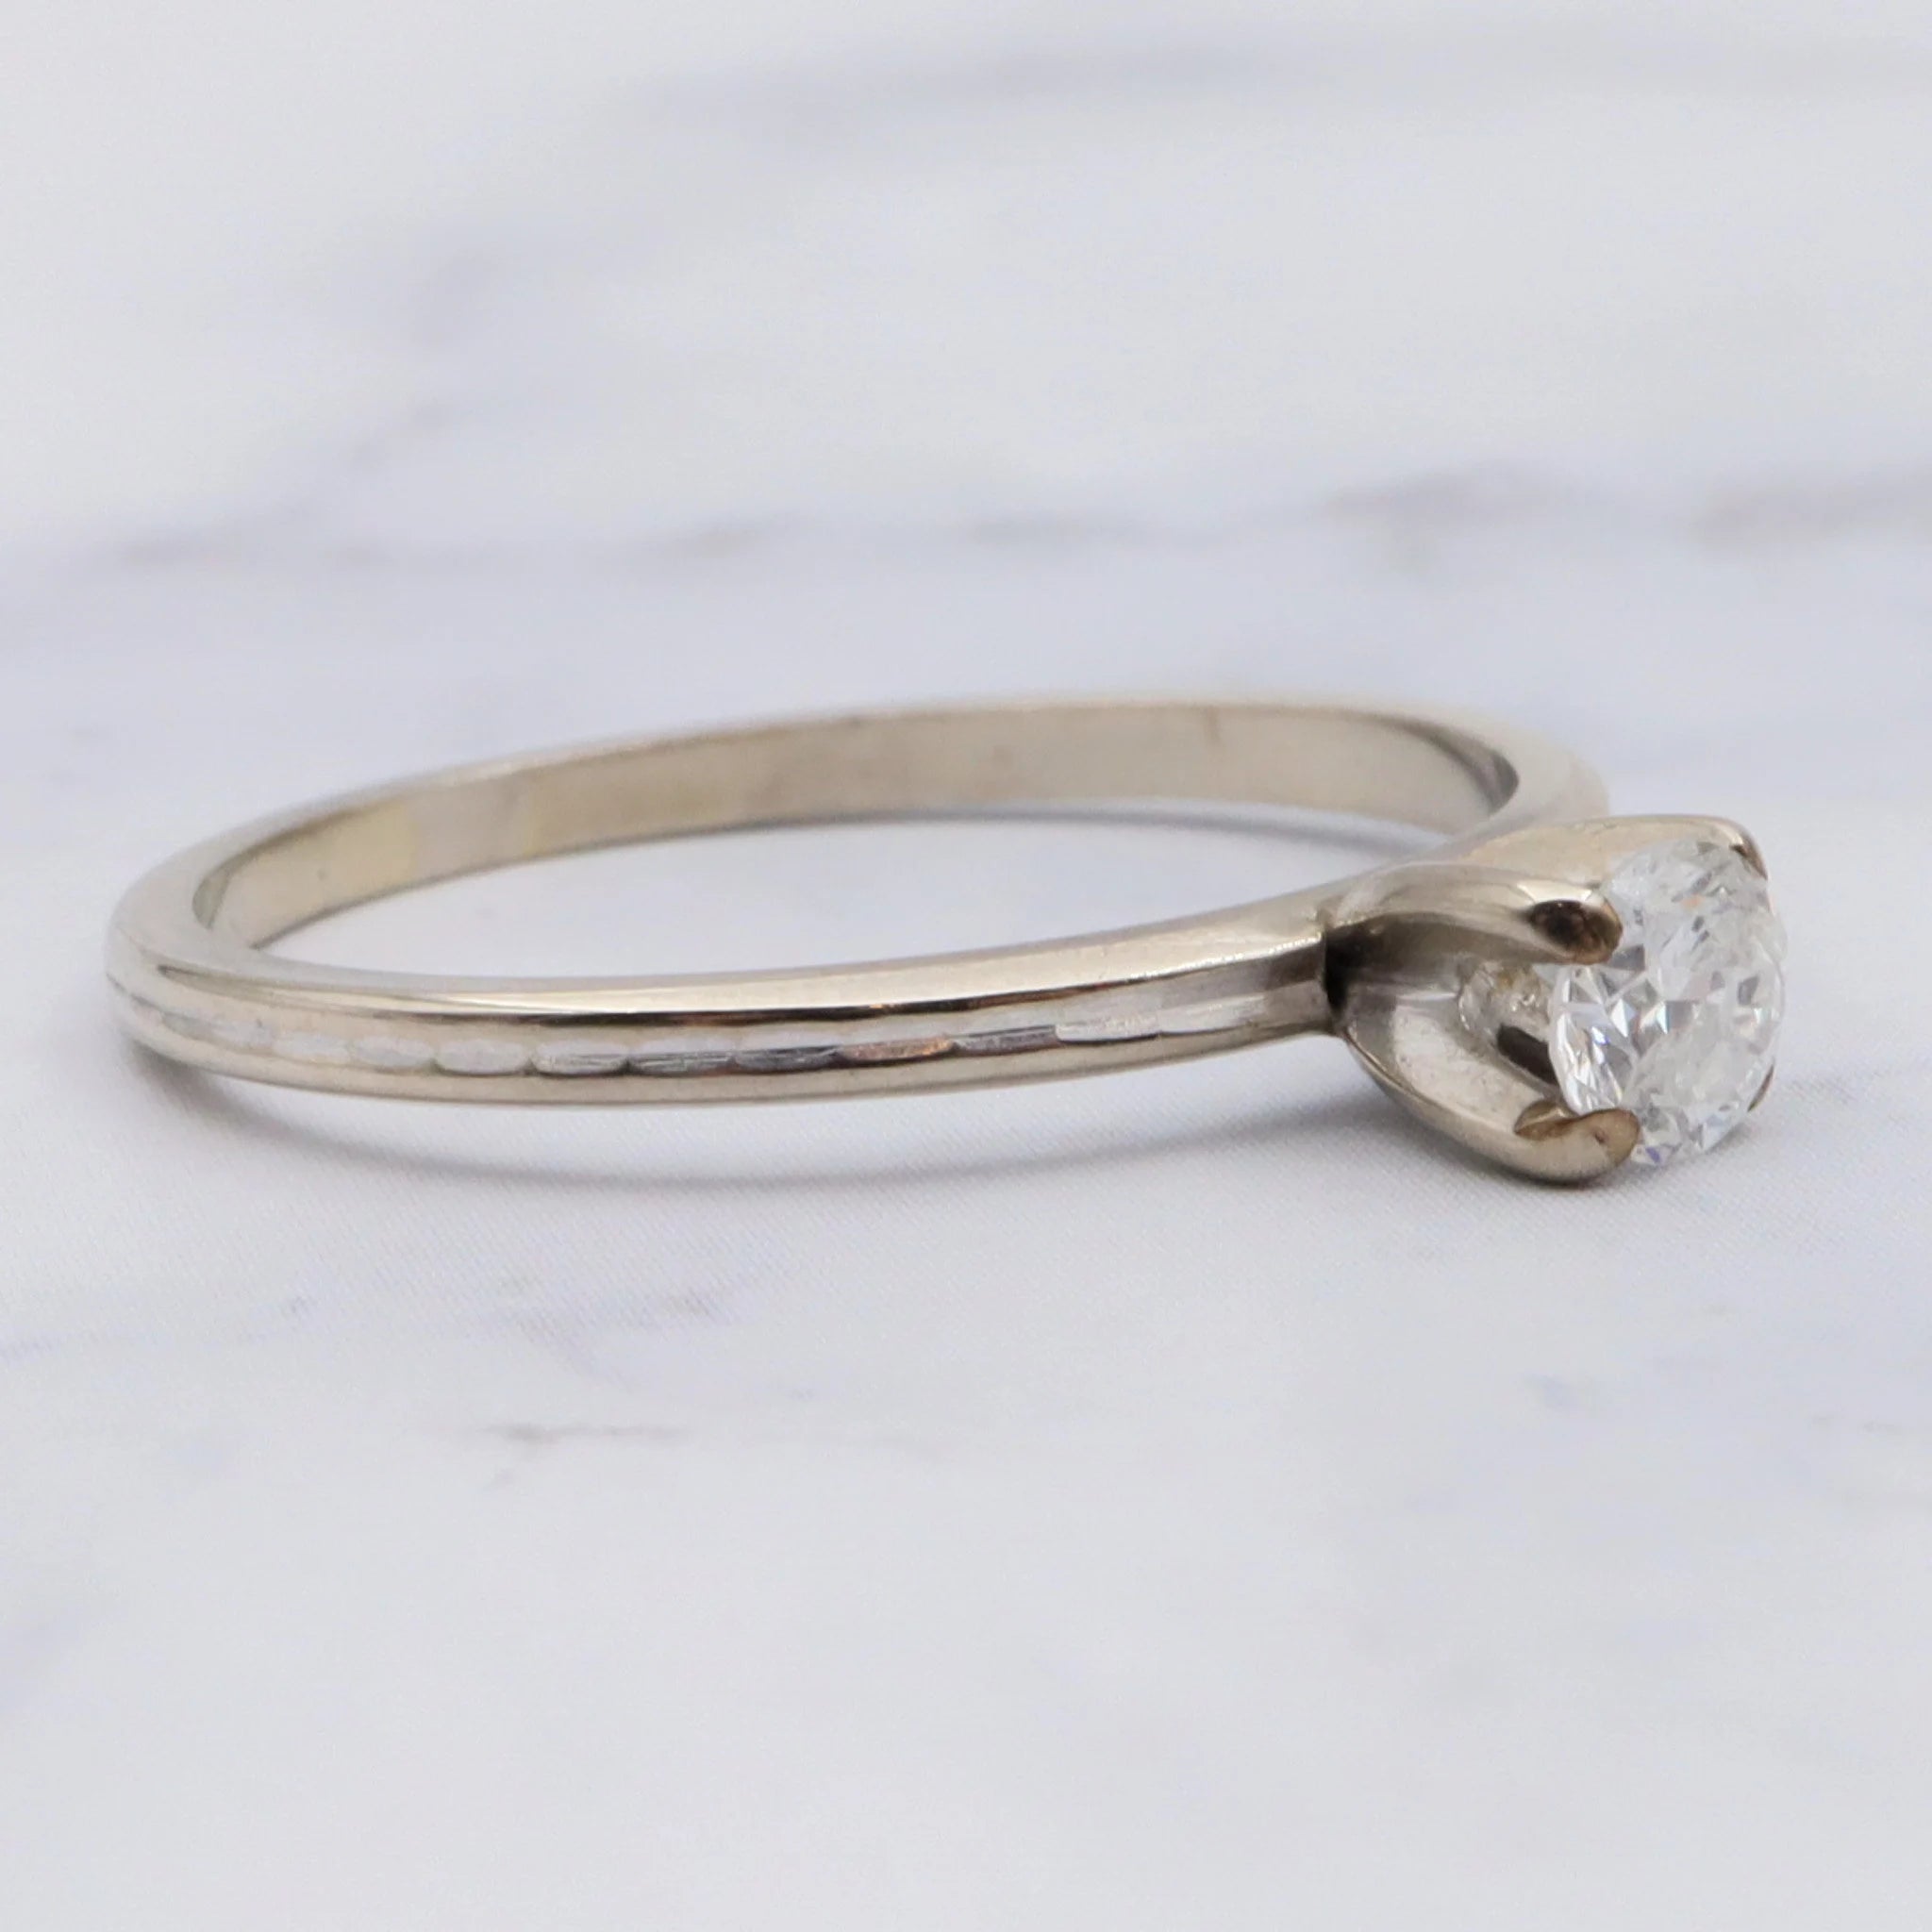 Antique Art Deco 14k white gold .25ct diamond solitaire ring, size 7.25